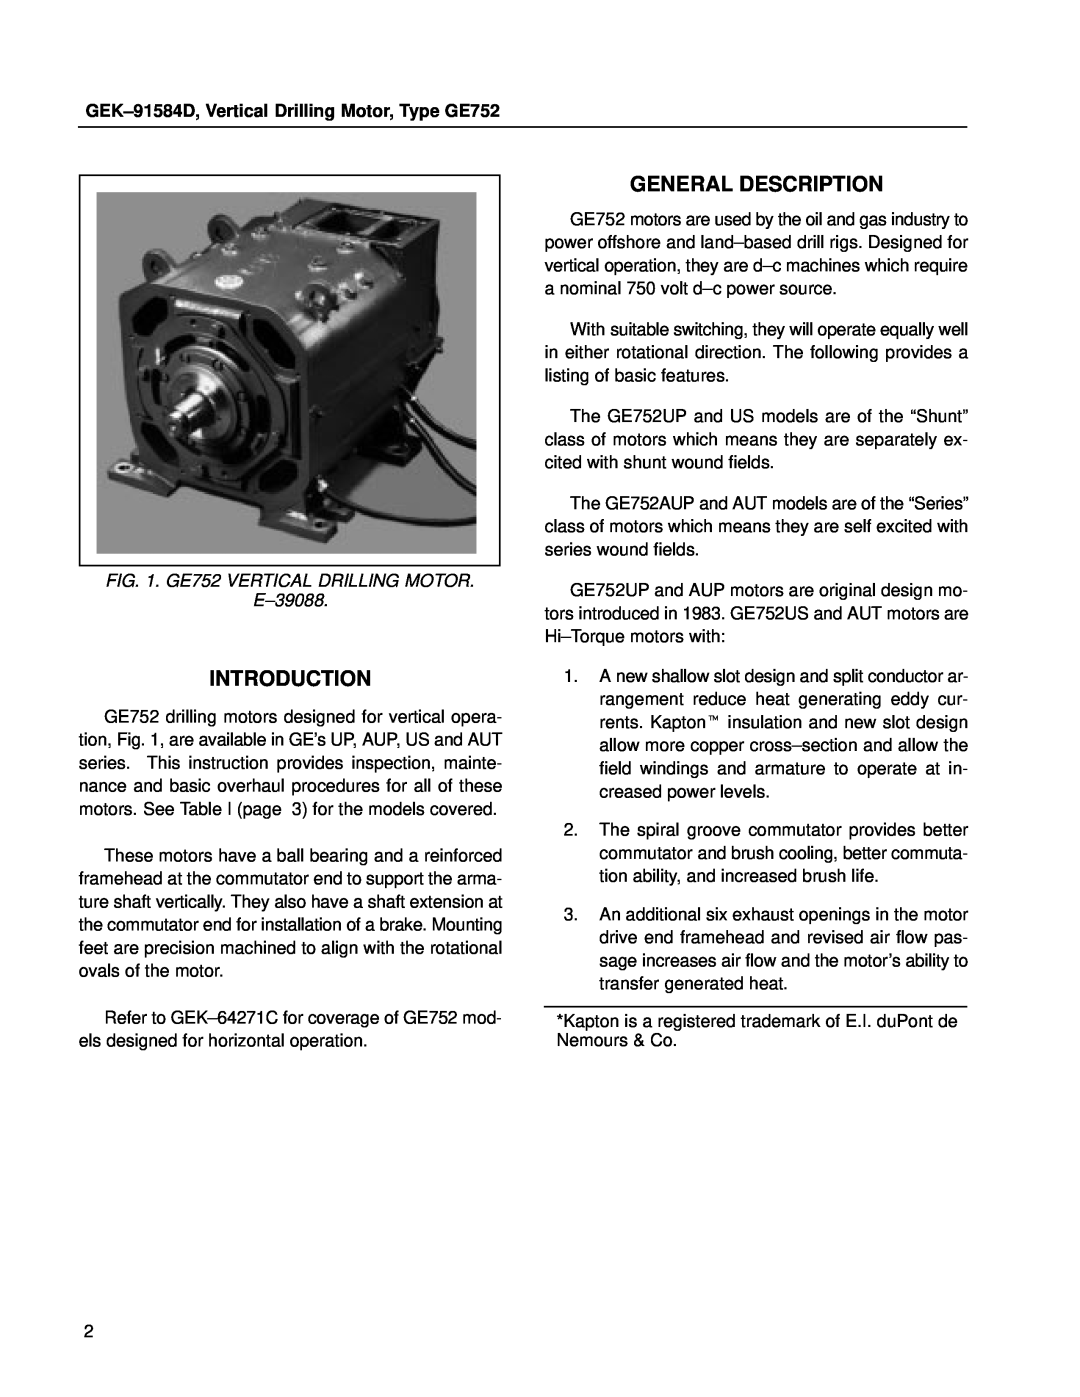 GE manual General Description, Introduction, GEK±91584D, Vertical Drilling Motor, Type GE752 